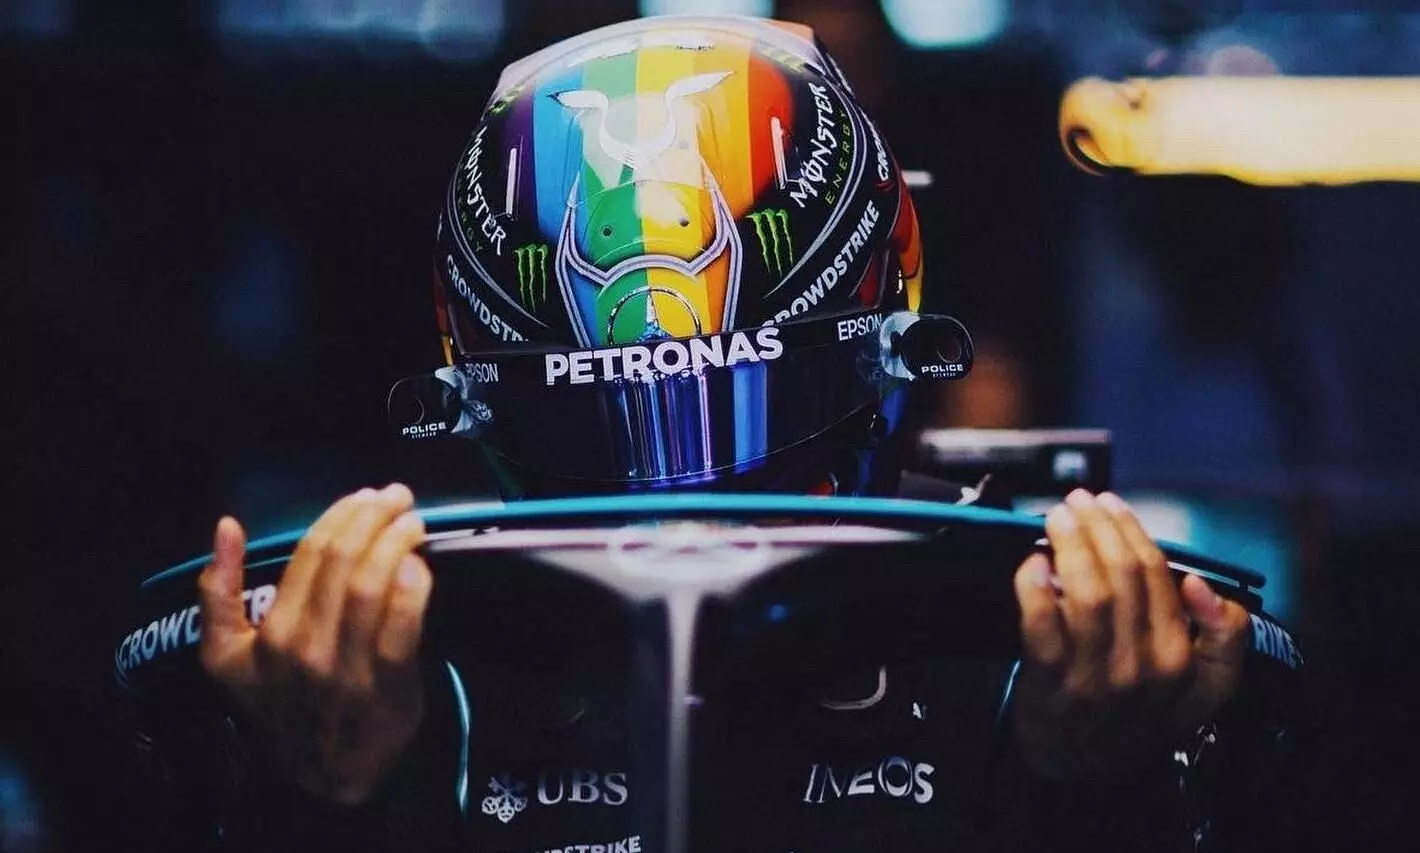 Hamilton races with controversial rainbow helmet in Qatar, wins praise